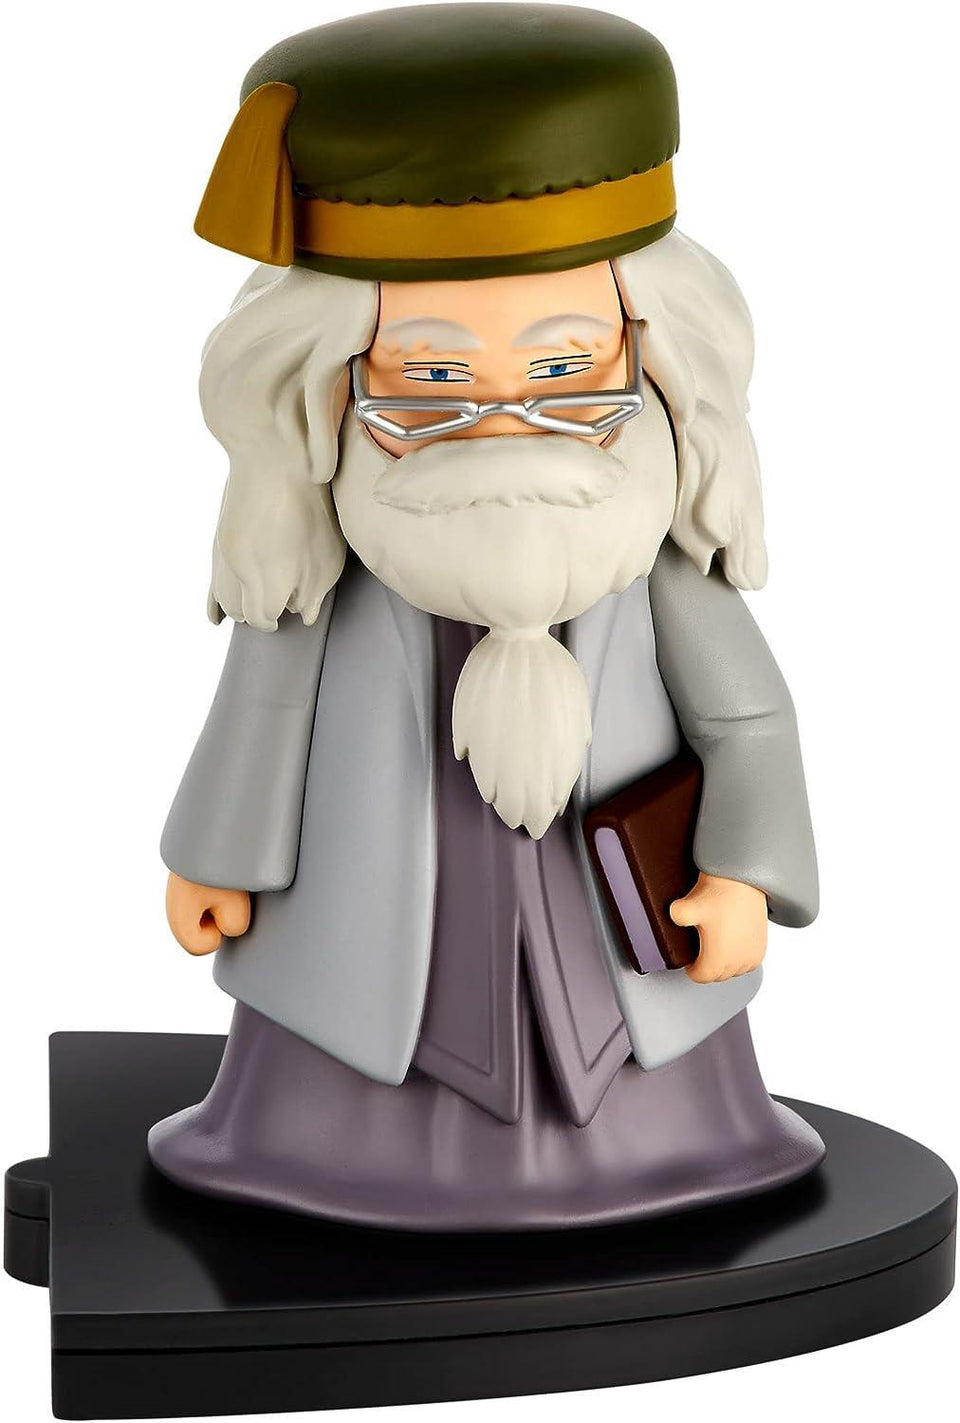 Albus Dumbledore Ink Stamper Figure Harry Potter Magical Fantasy Characters PMI International